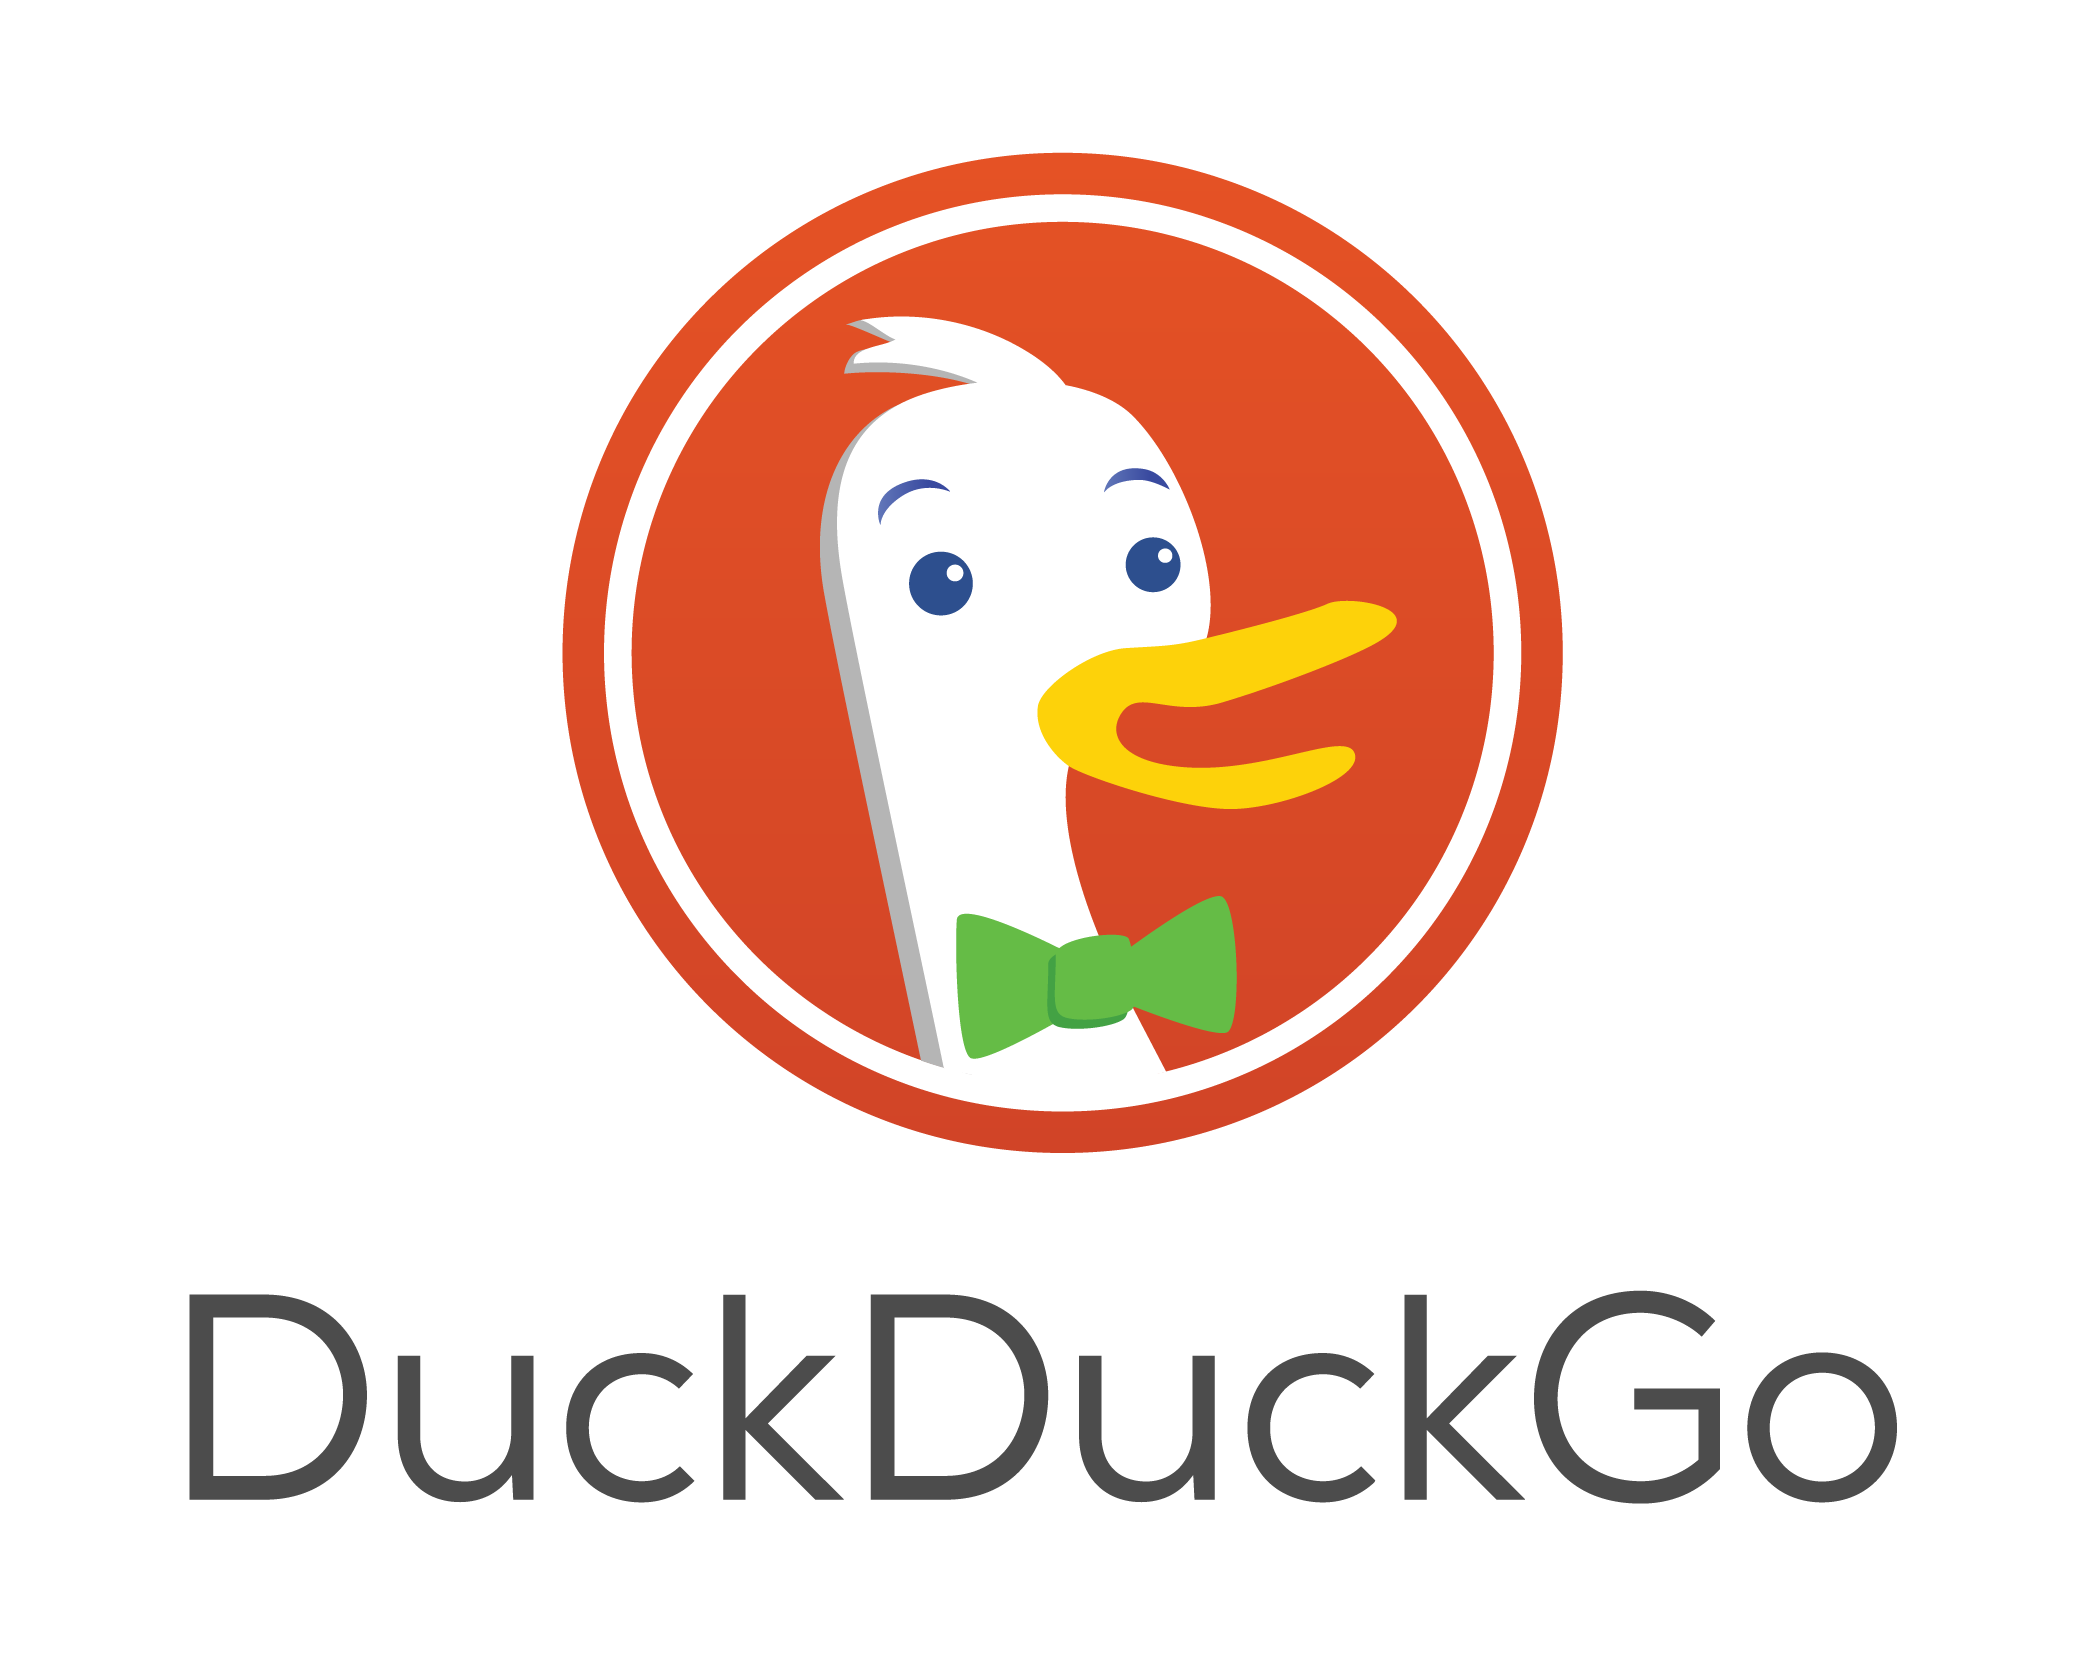 DuckDuckGo (DDG) logo